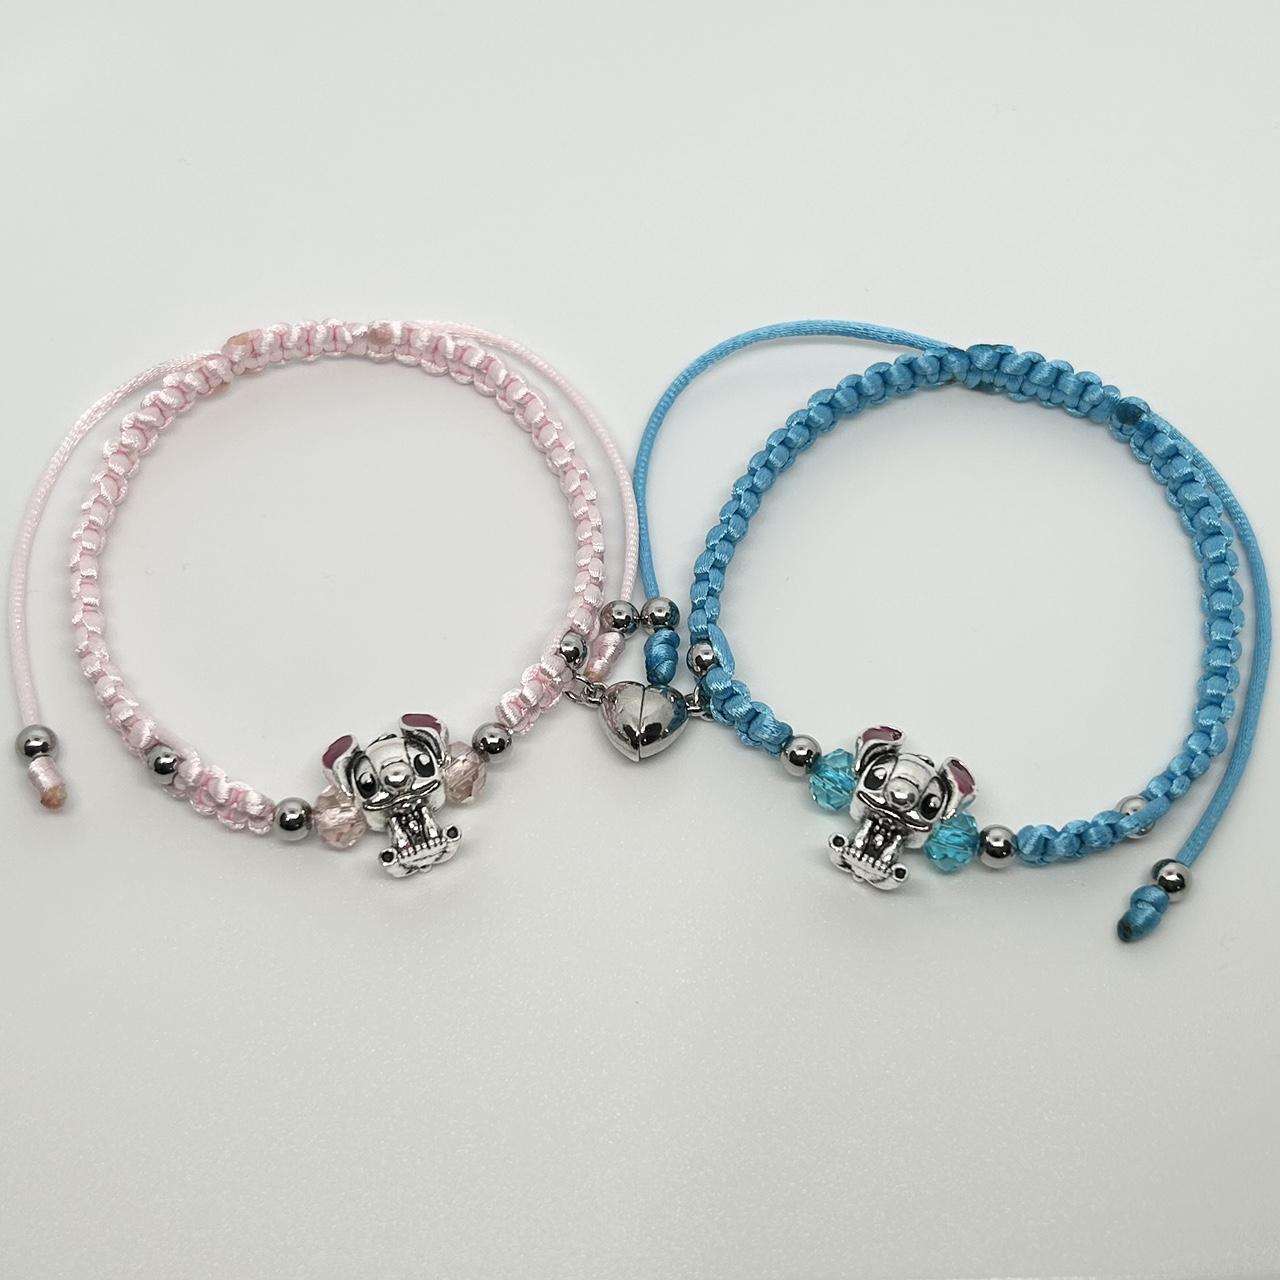 hello kitty and spider man charm bracelets｜TikTok Search